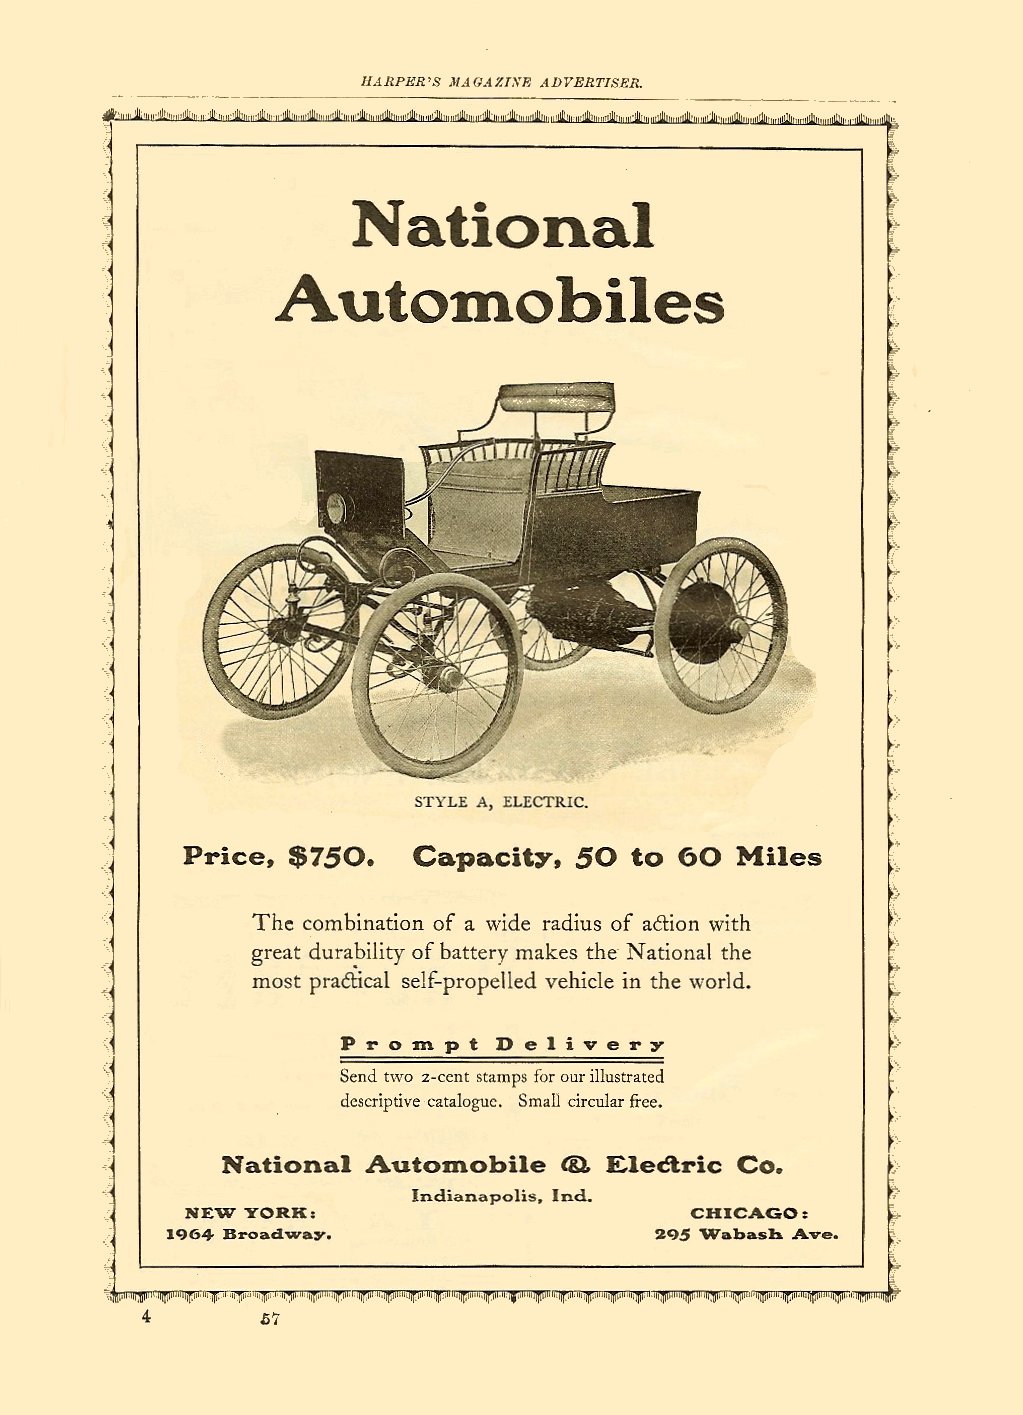 1901 American Auto Advertising